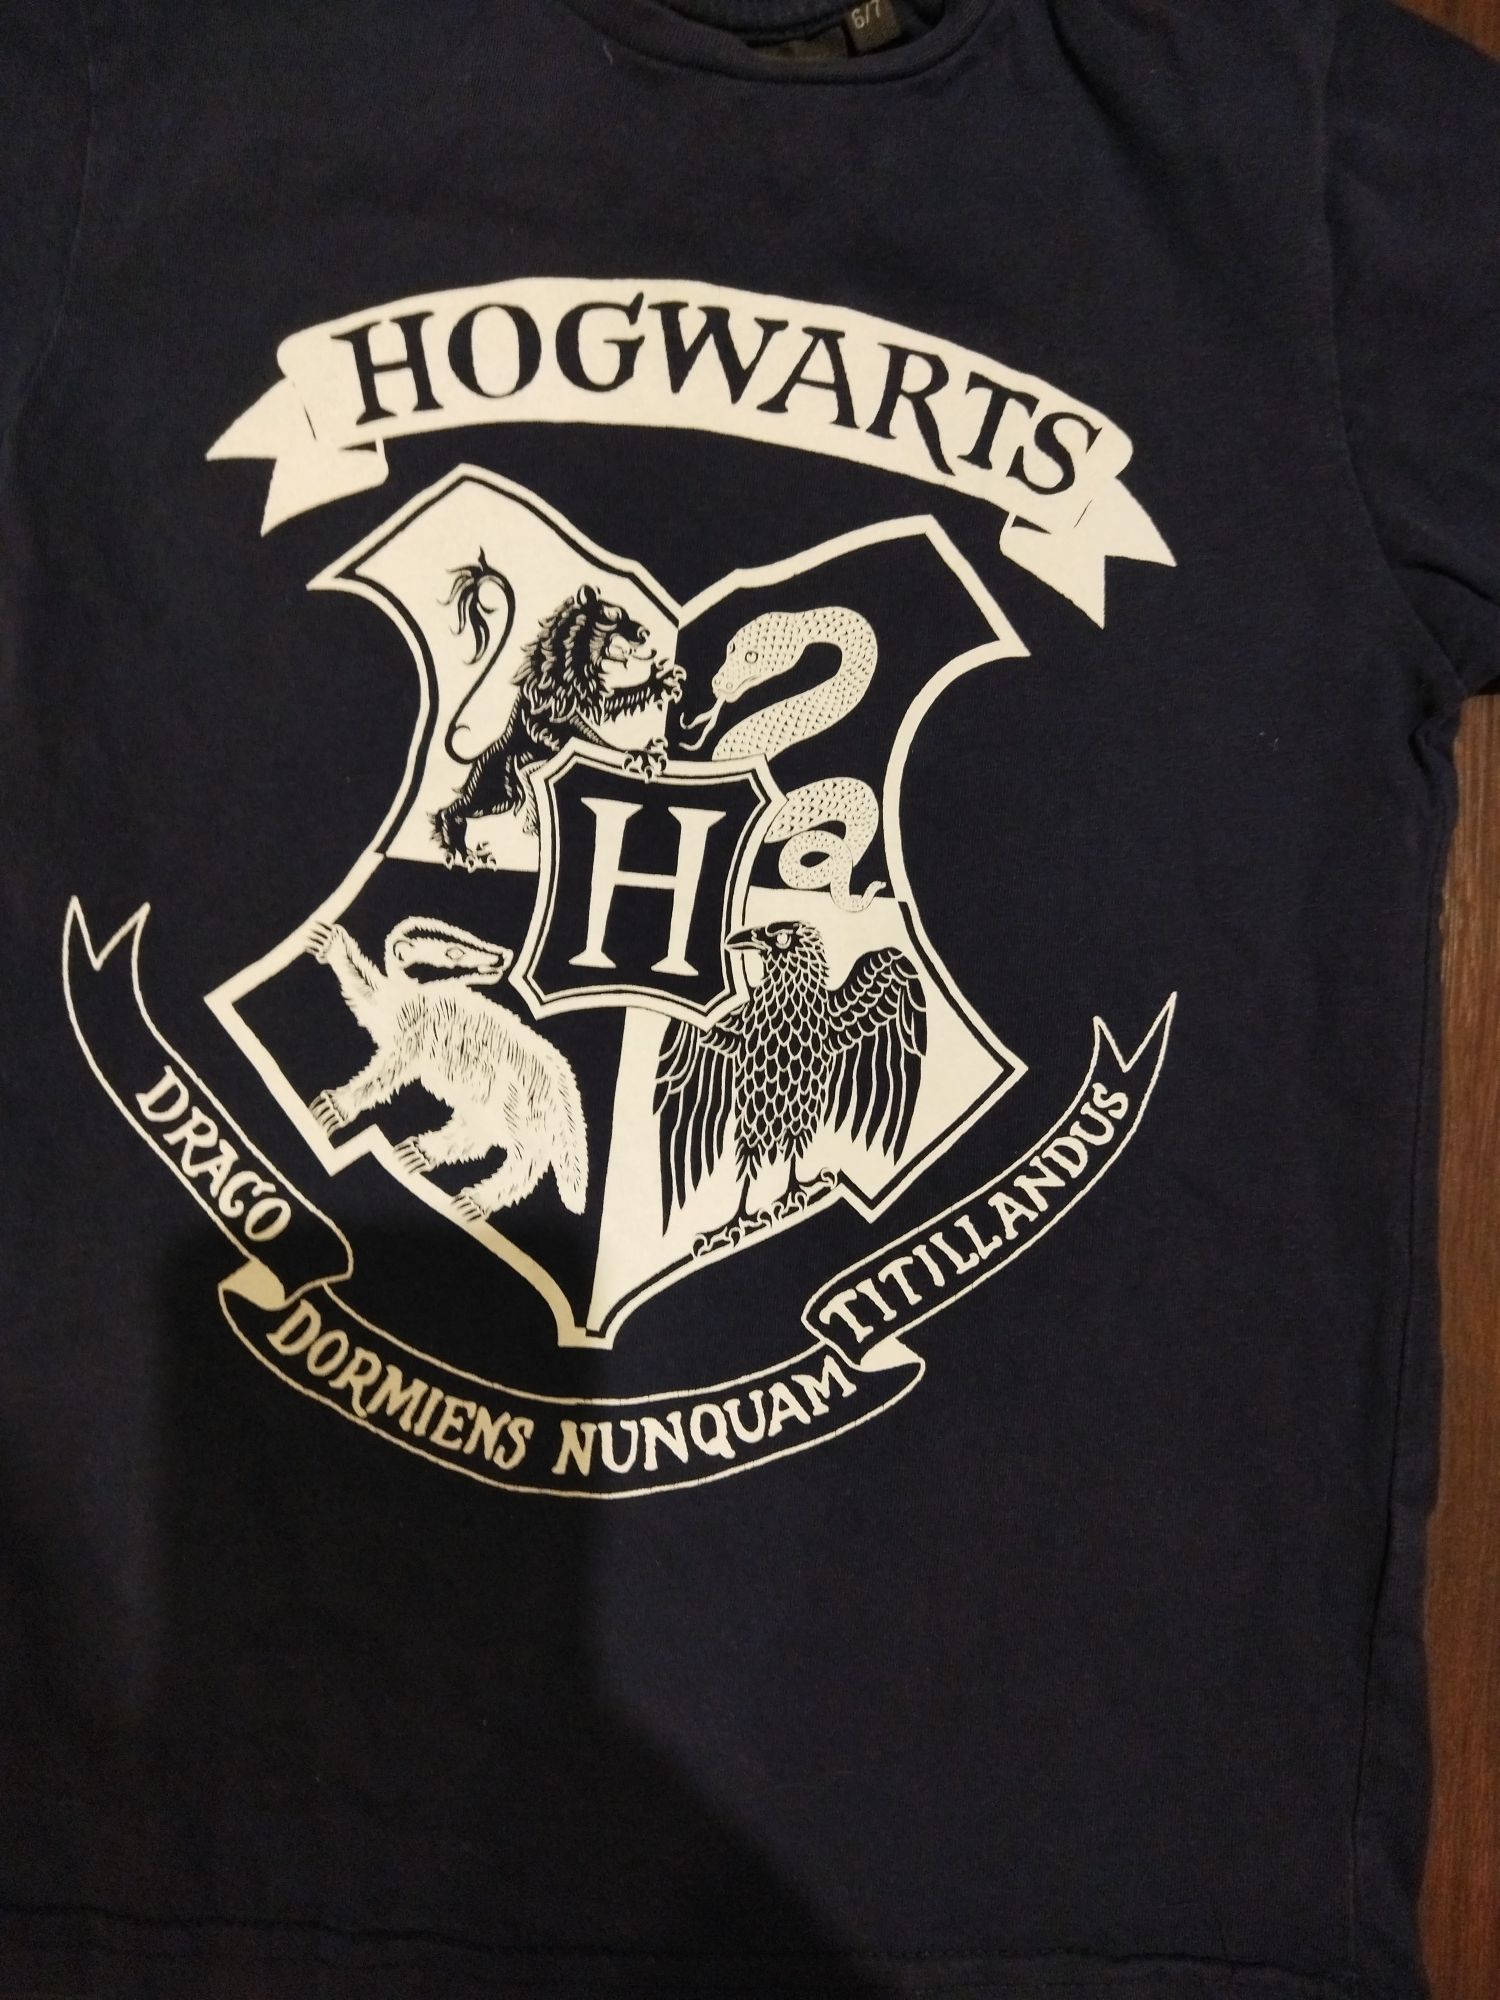 Koszulka t-shirt 116 dla chłopca Harry Potter